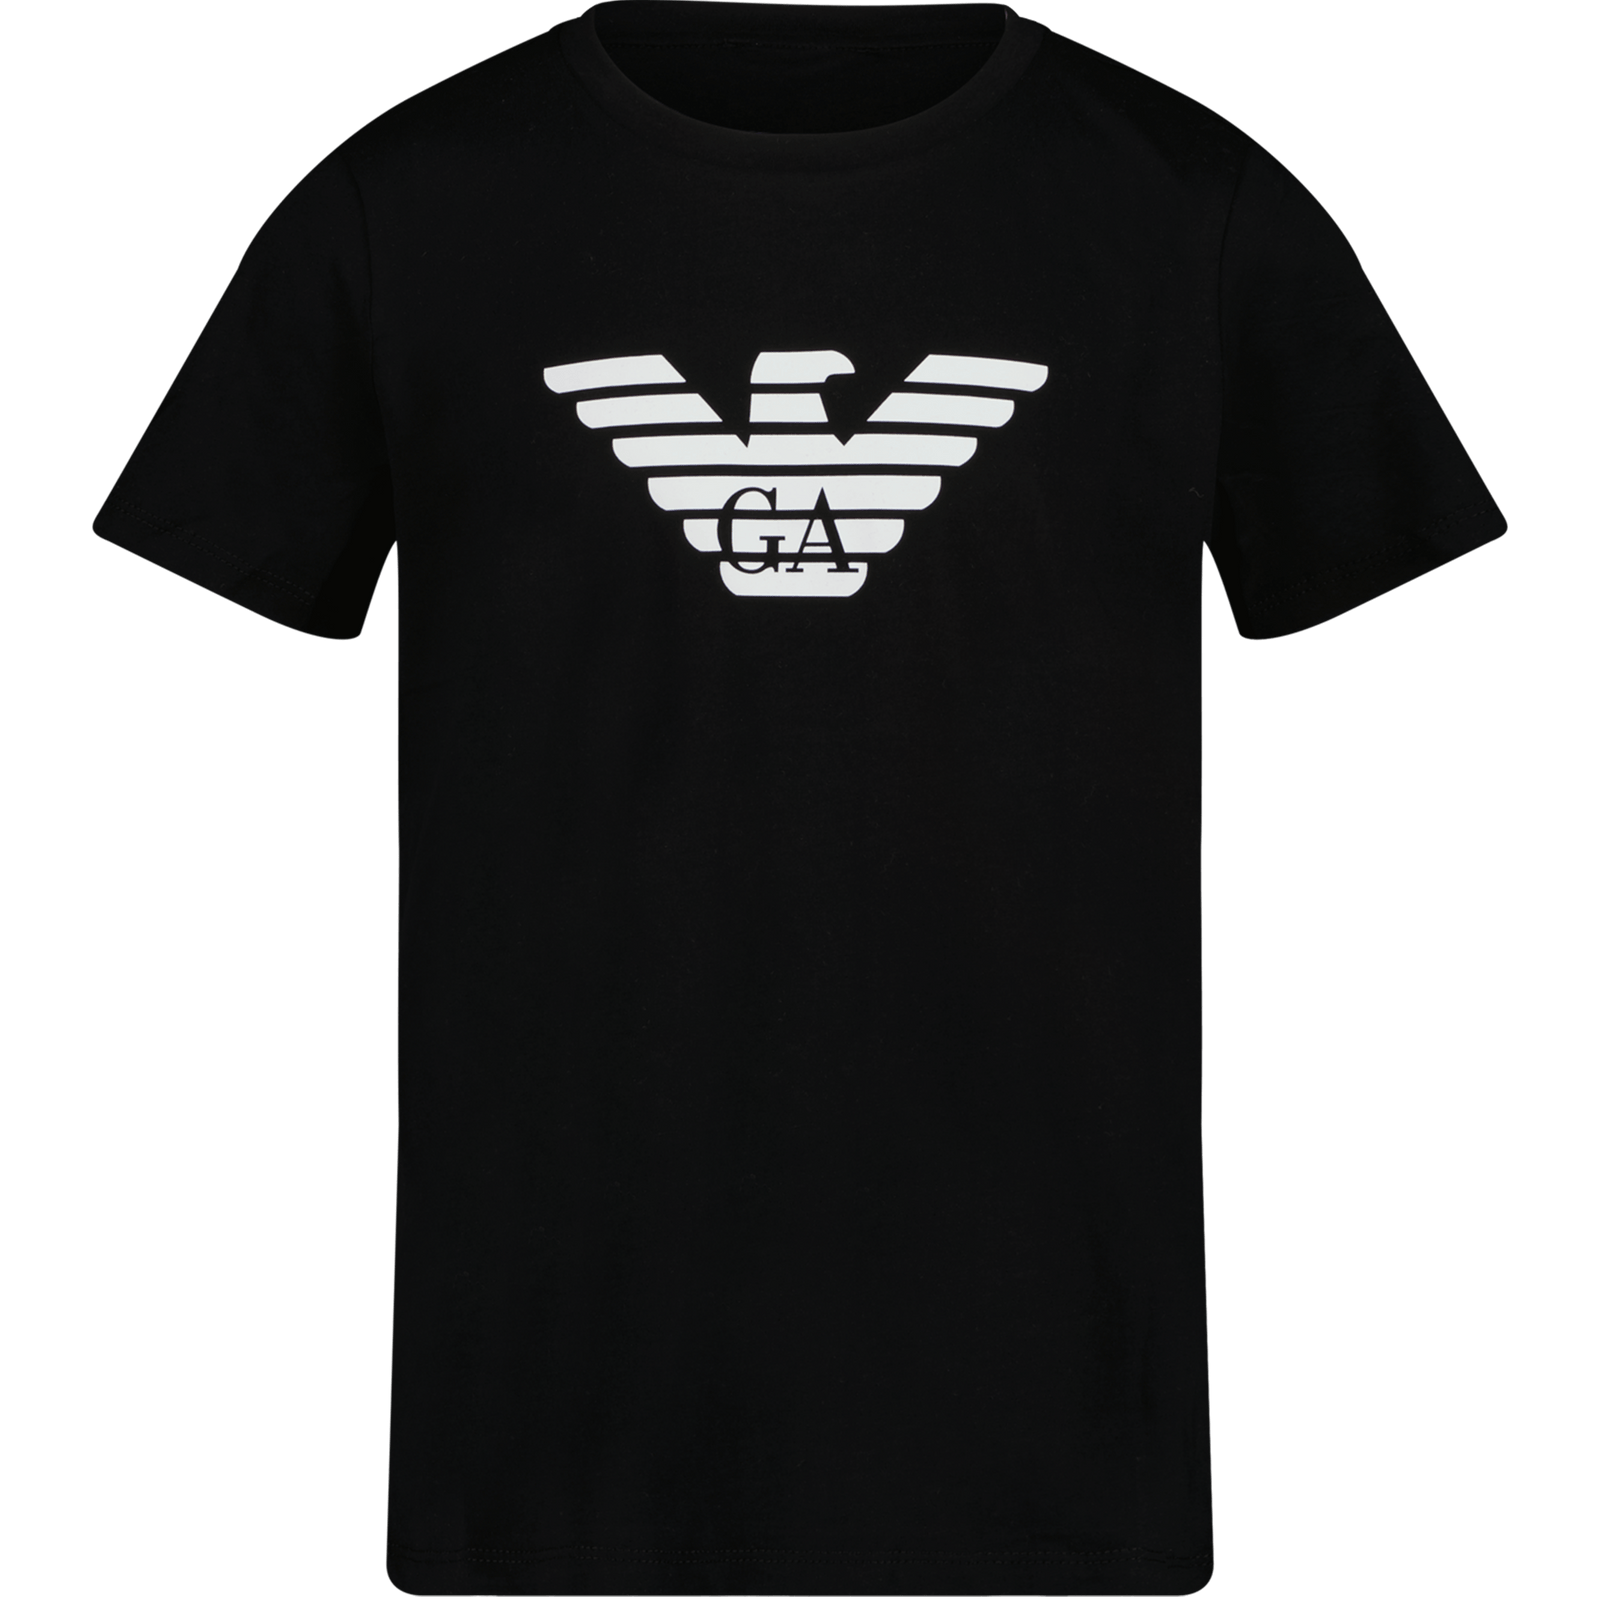 Armani Kinder Jongens T-Shirt Zwart